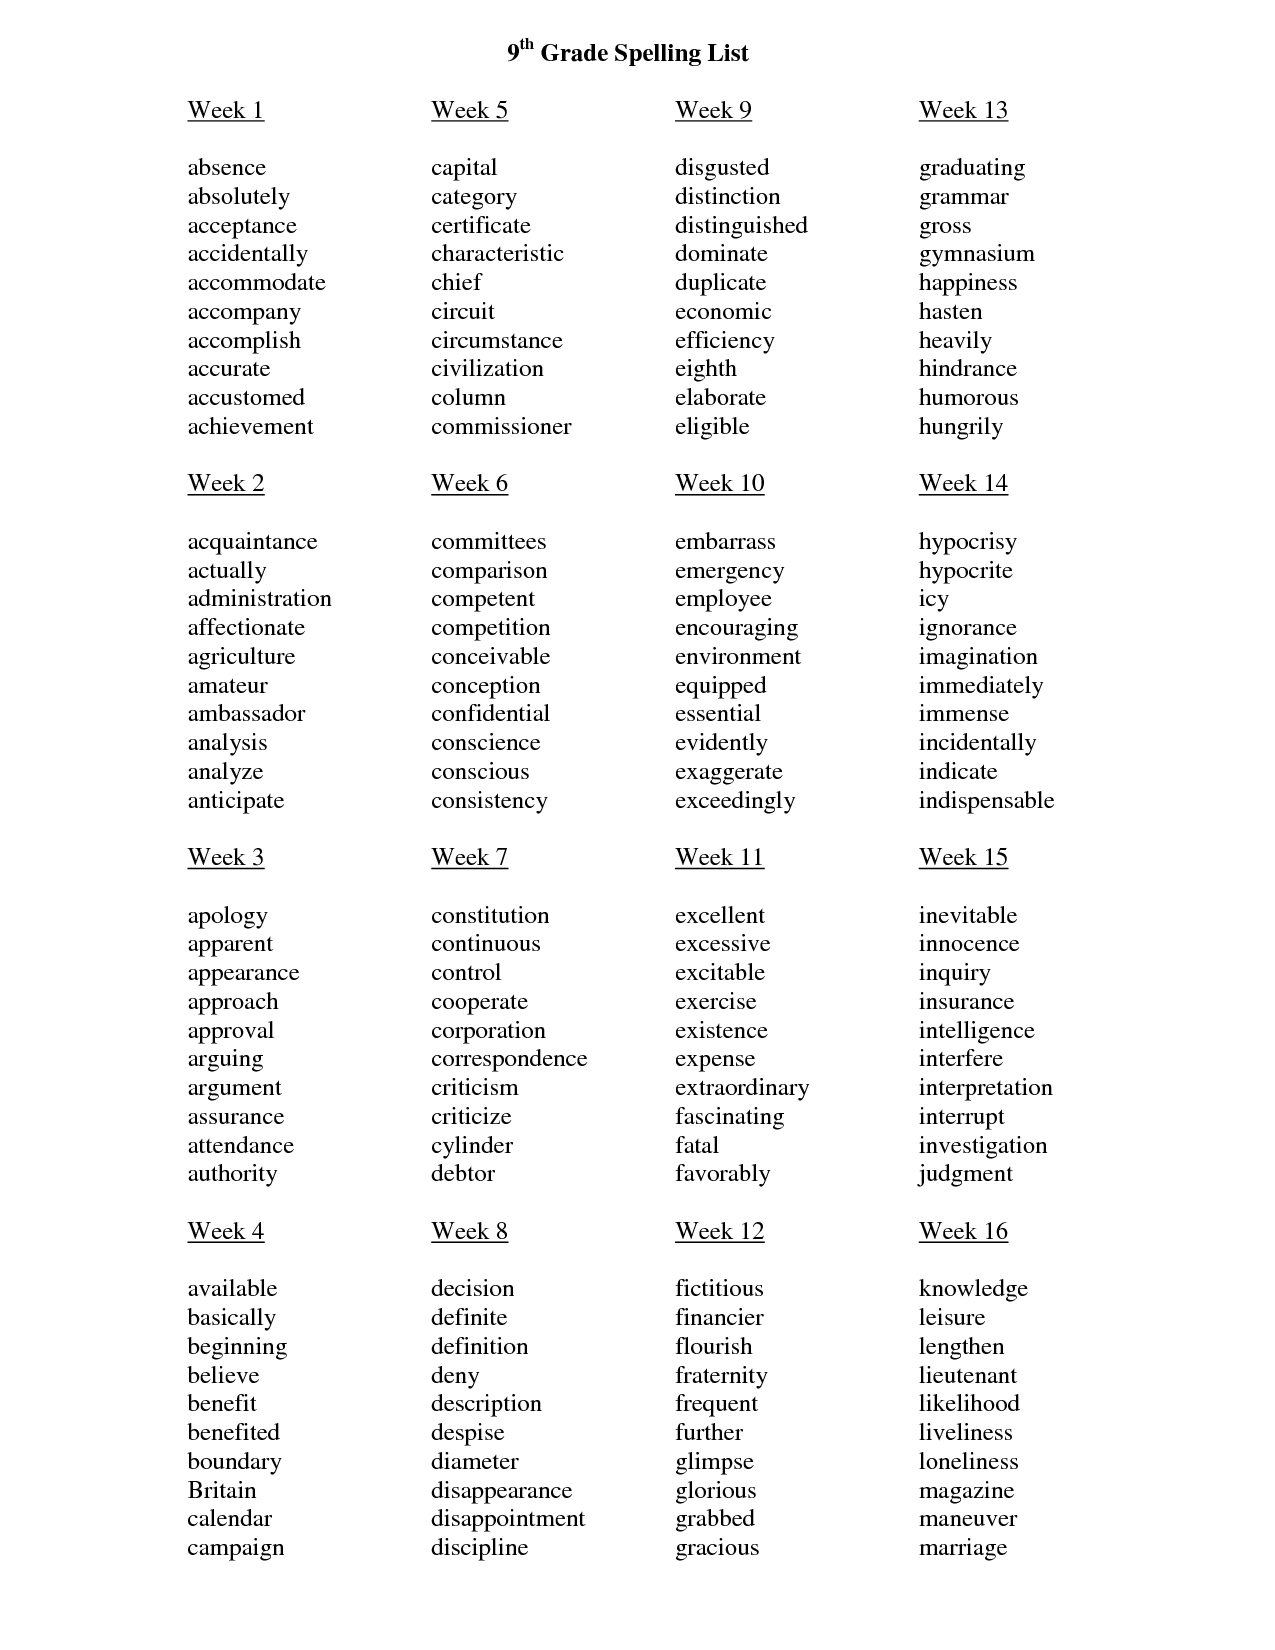 9th Grade Spelling Words List Image